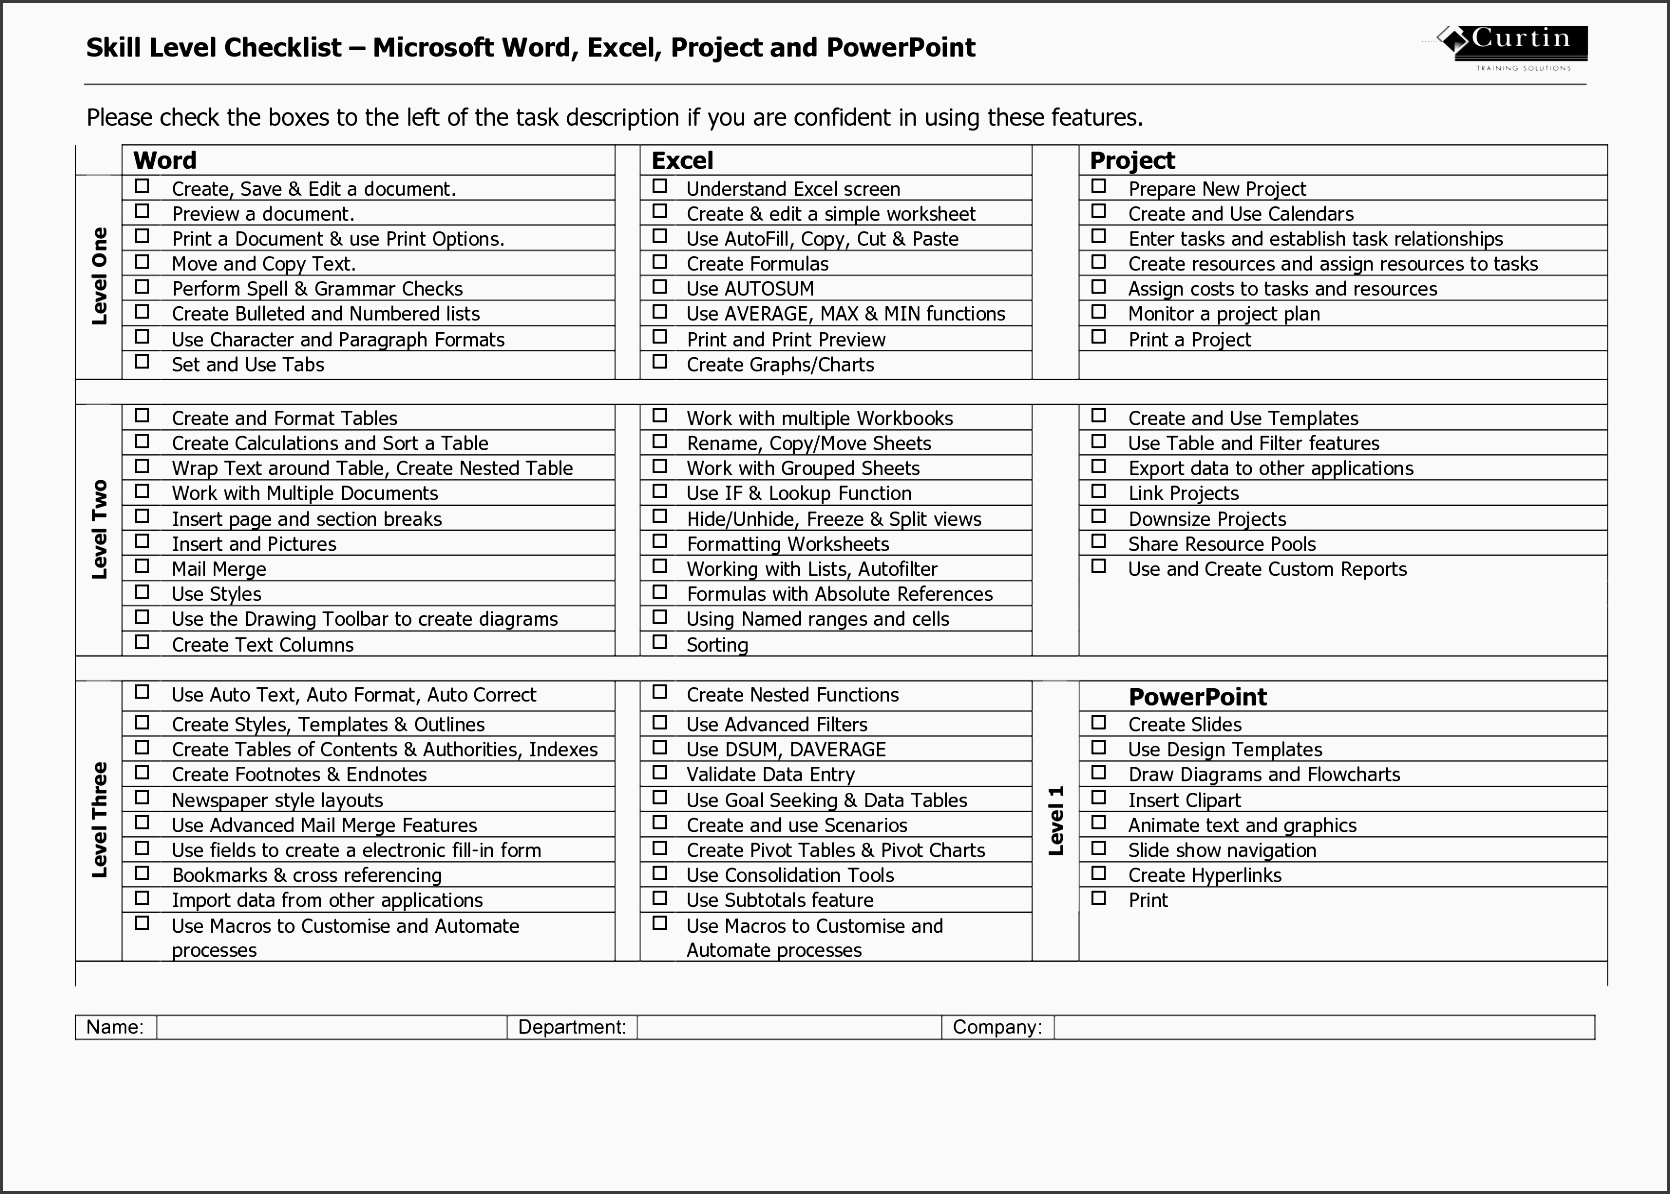 11 Easy to Edit Funeral Planning Checklist Template - SampleTemplatess - SampleTemplatess1670 x 1194